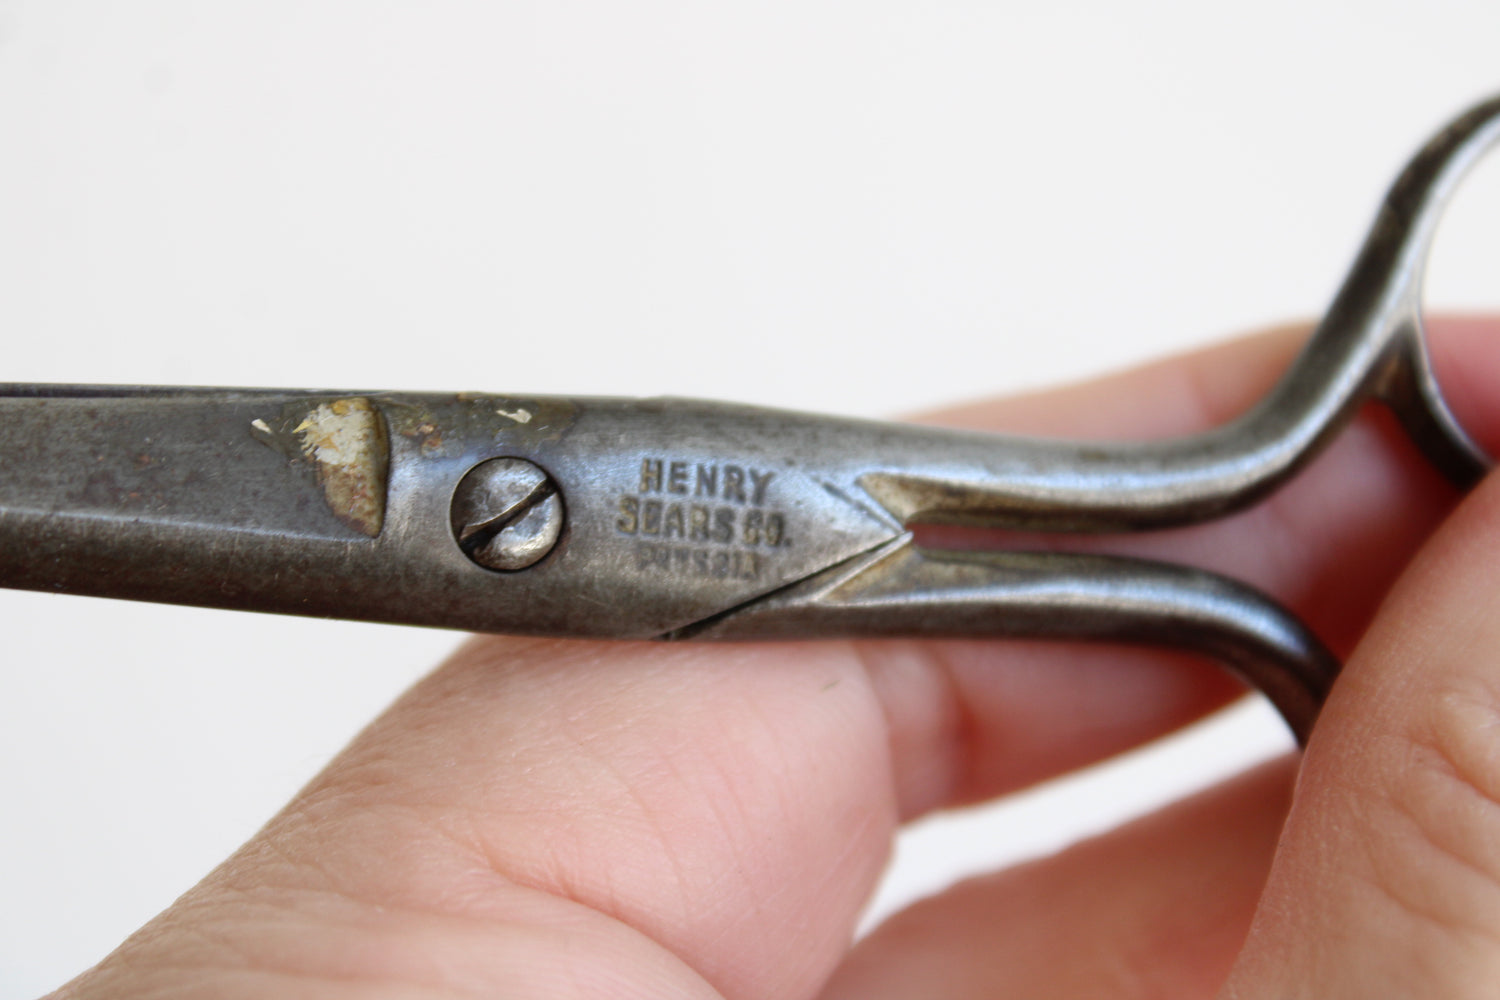 Antique Henry Sears Co. Prussia Scissors